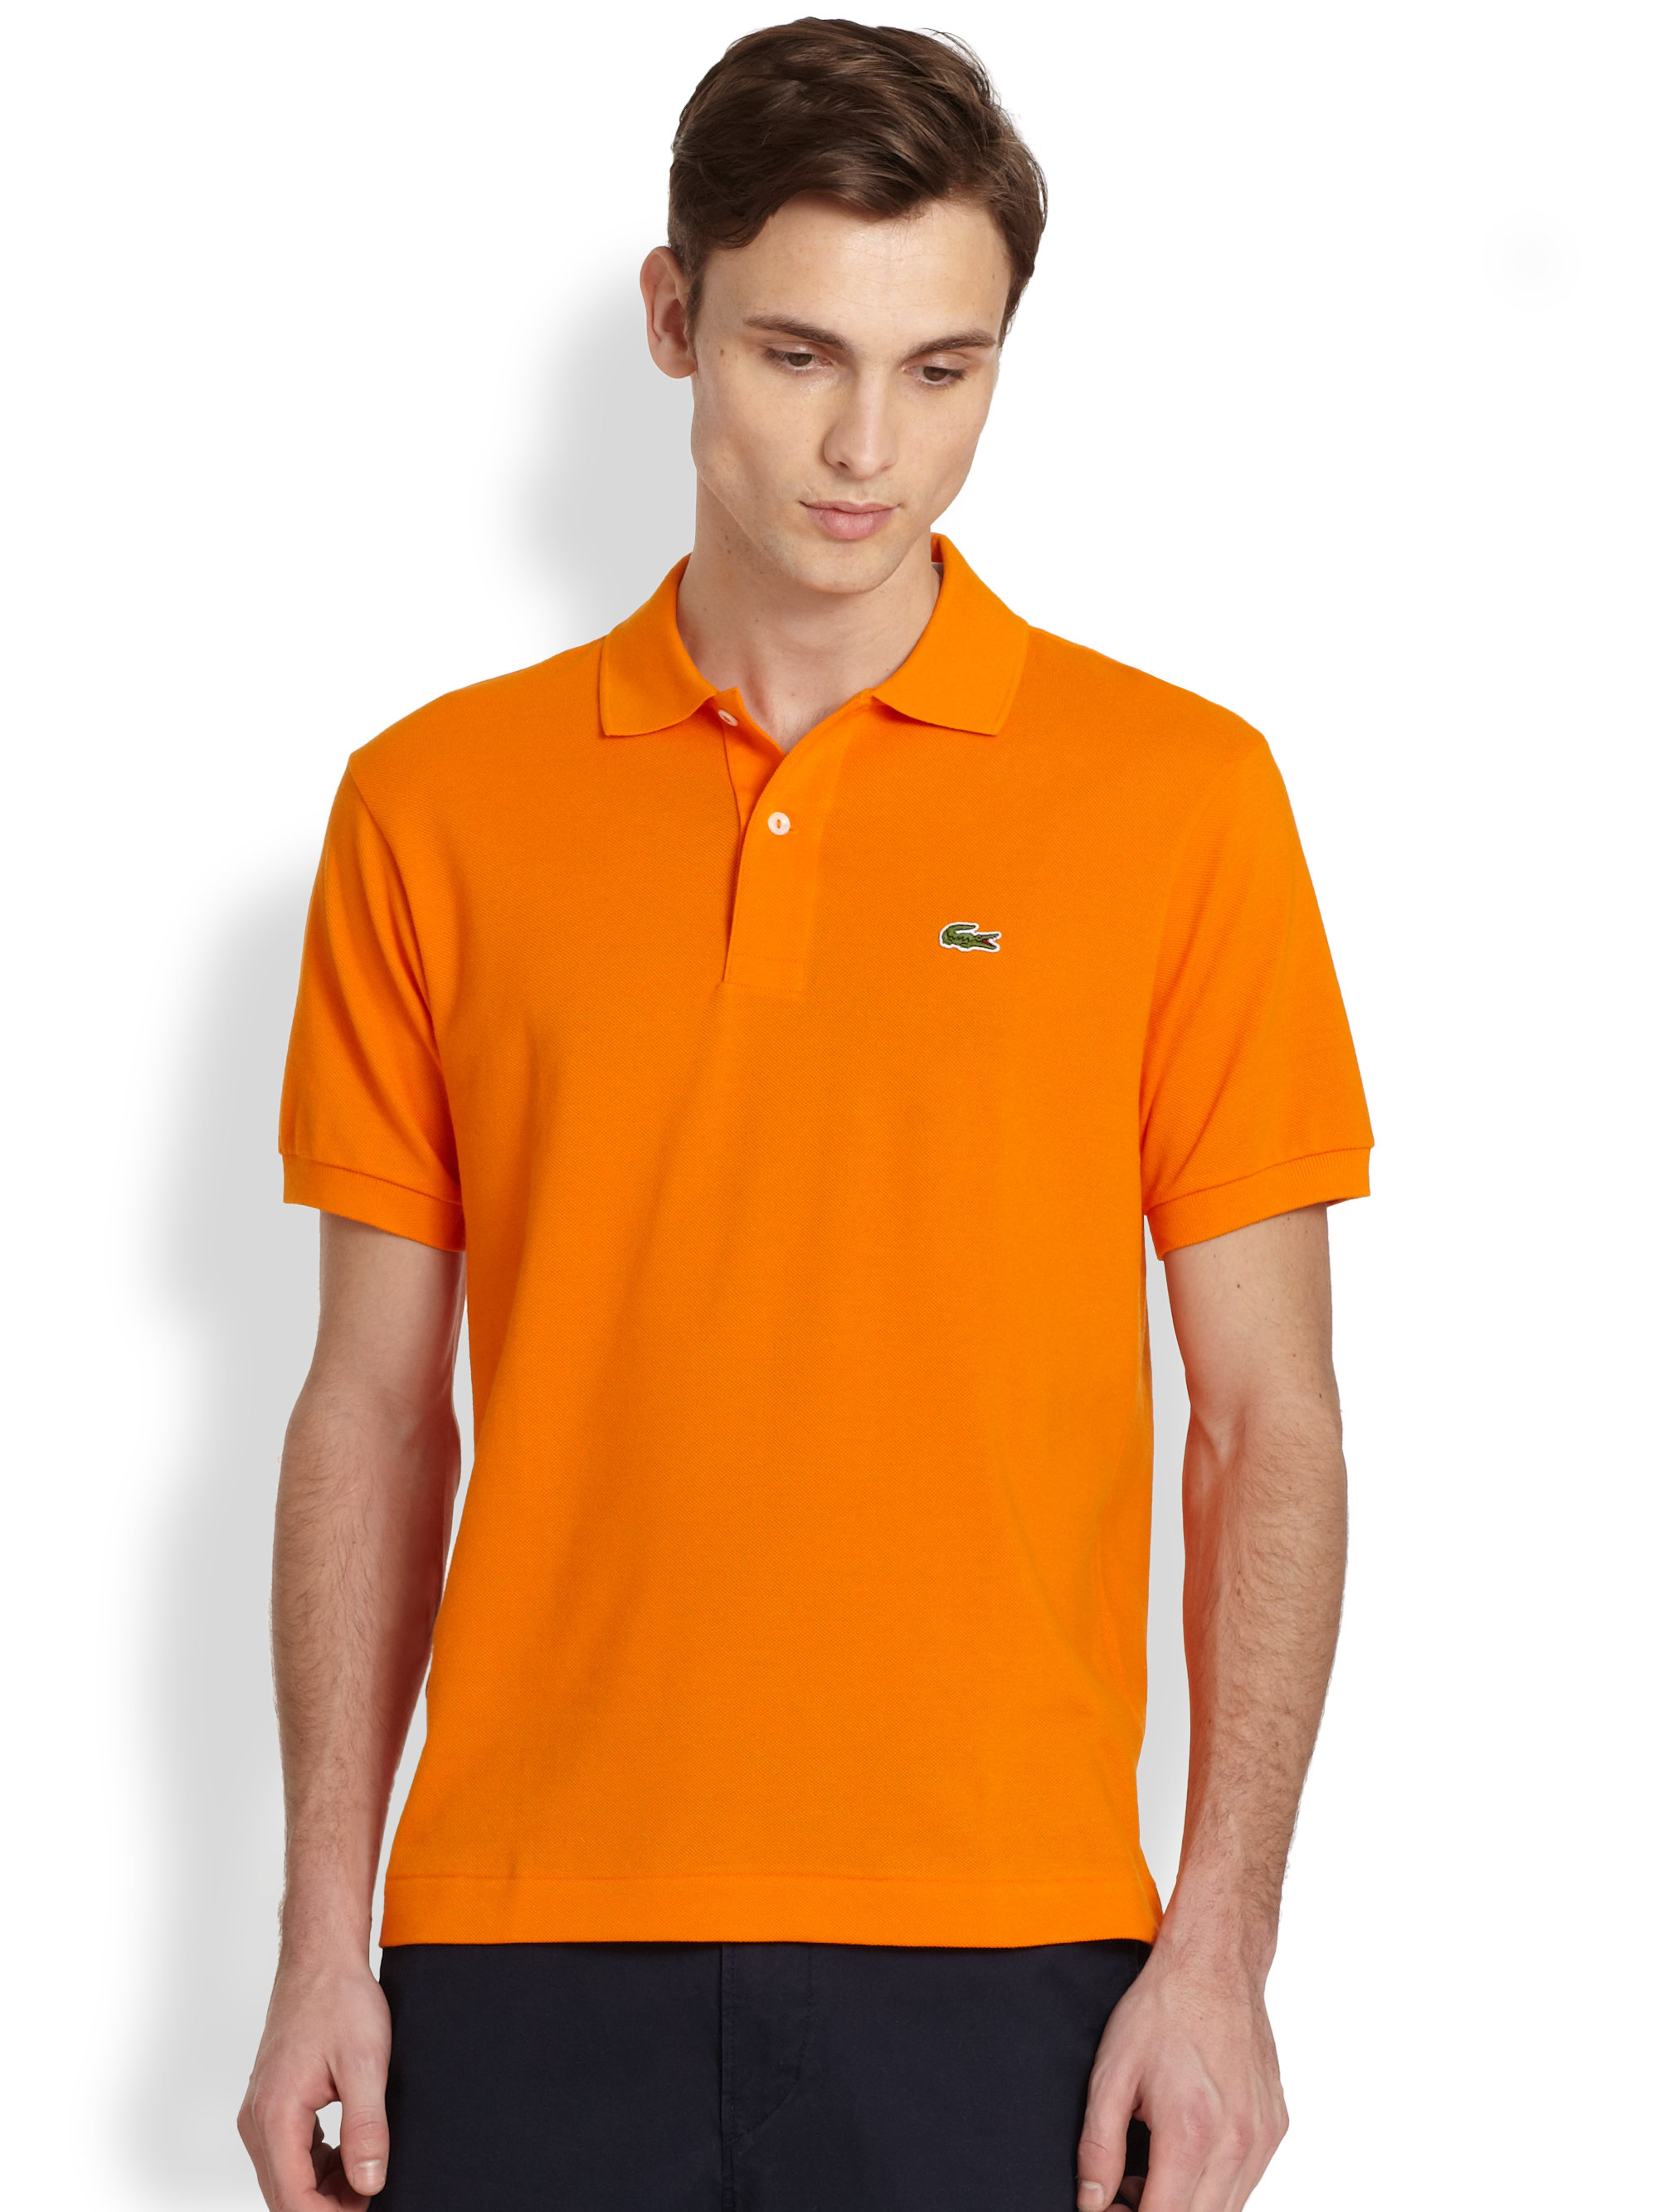 orange lacoste polo shirt